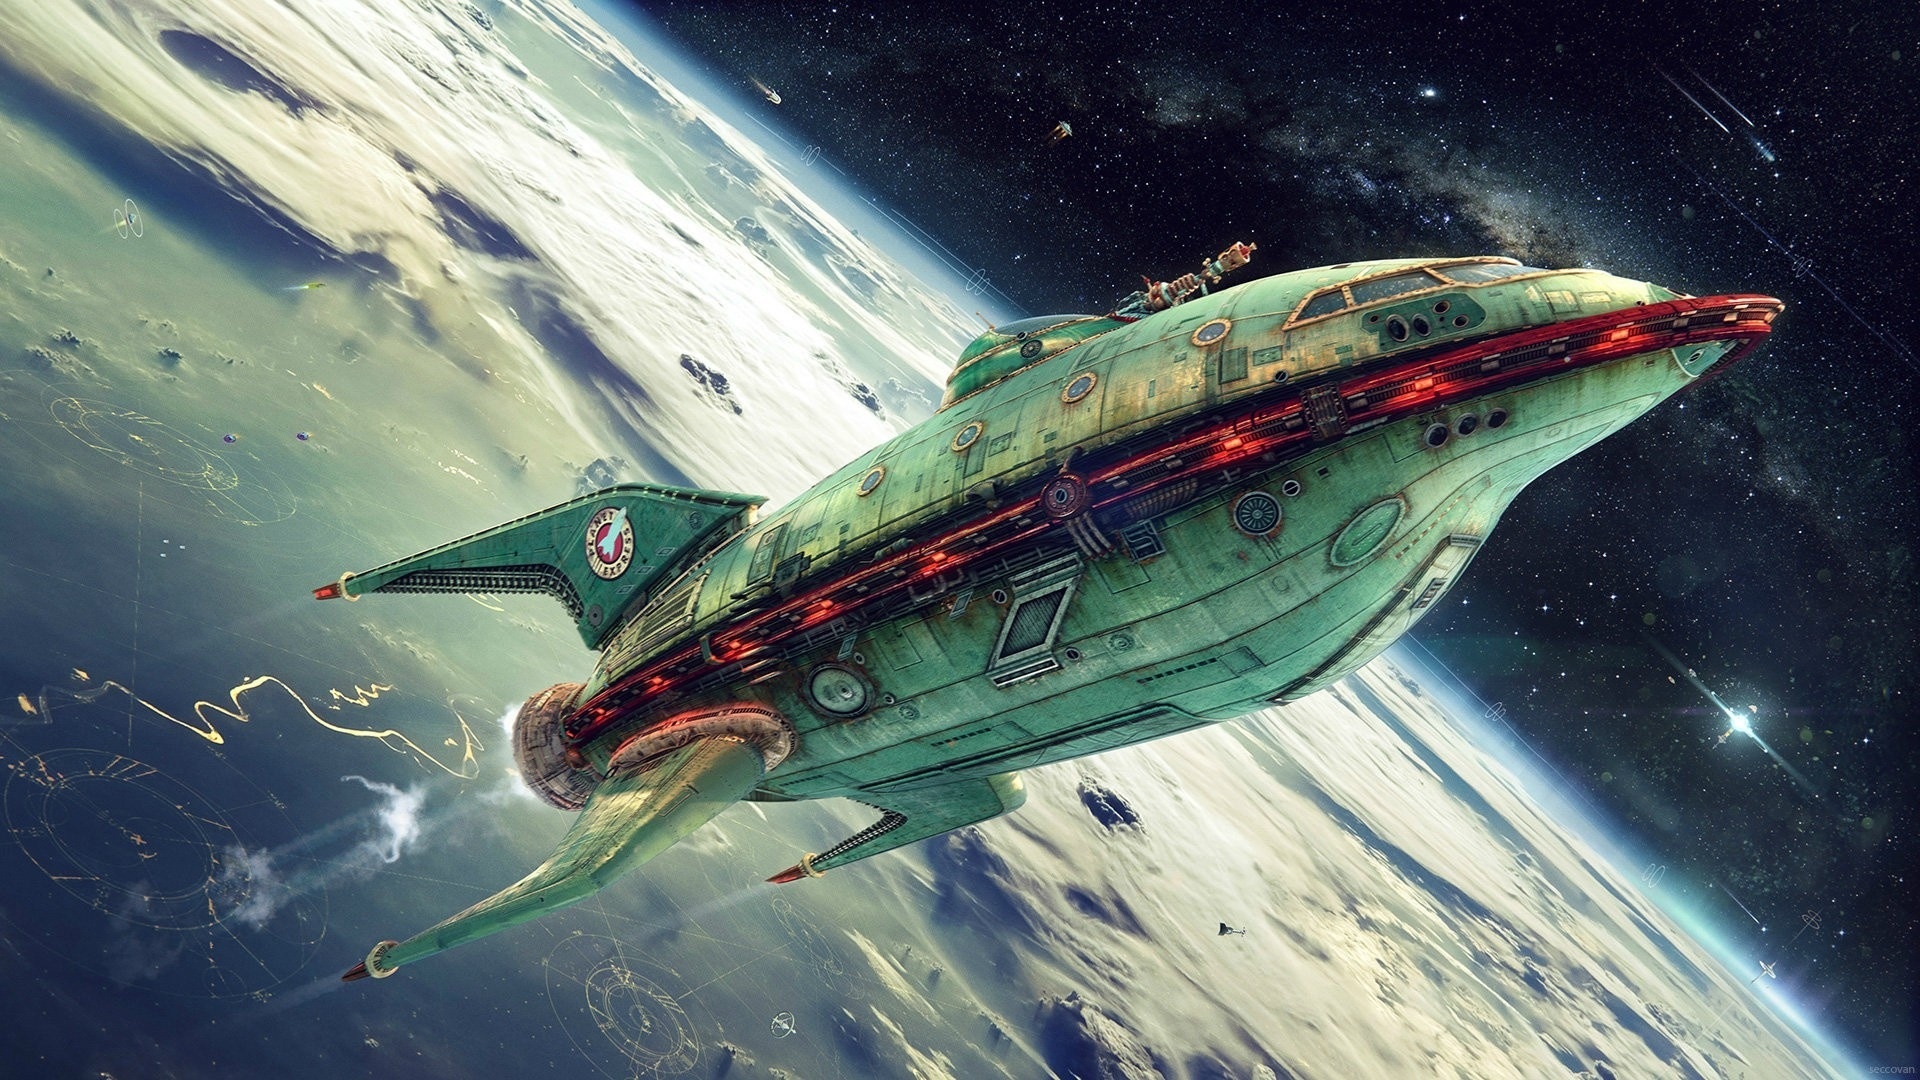 Spaceships Art wallpaper for desktop